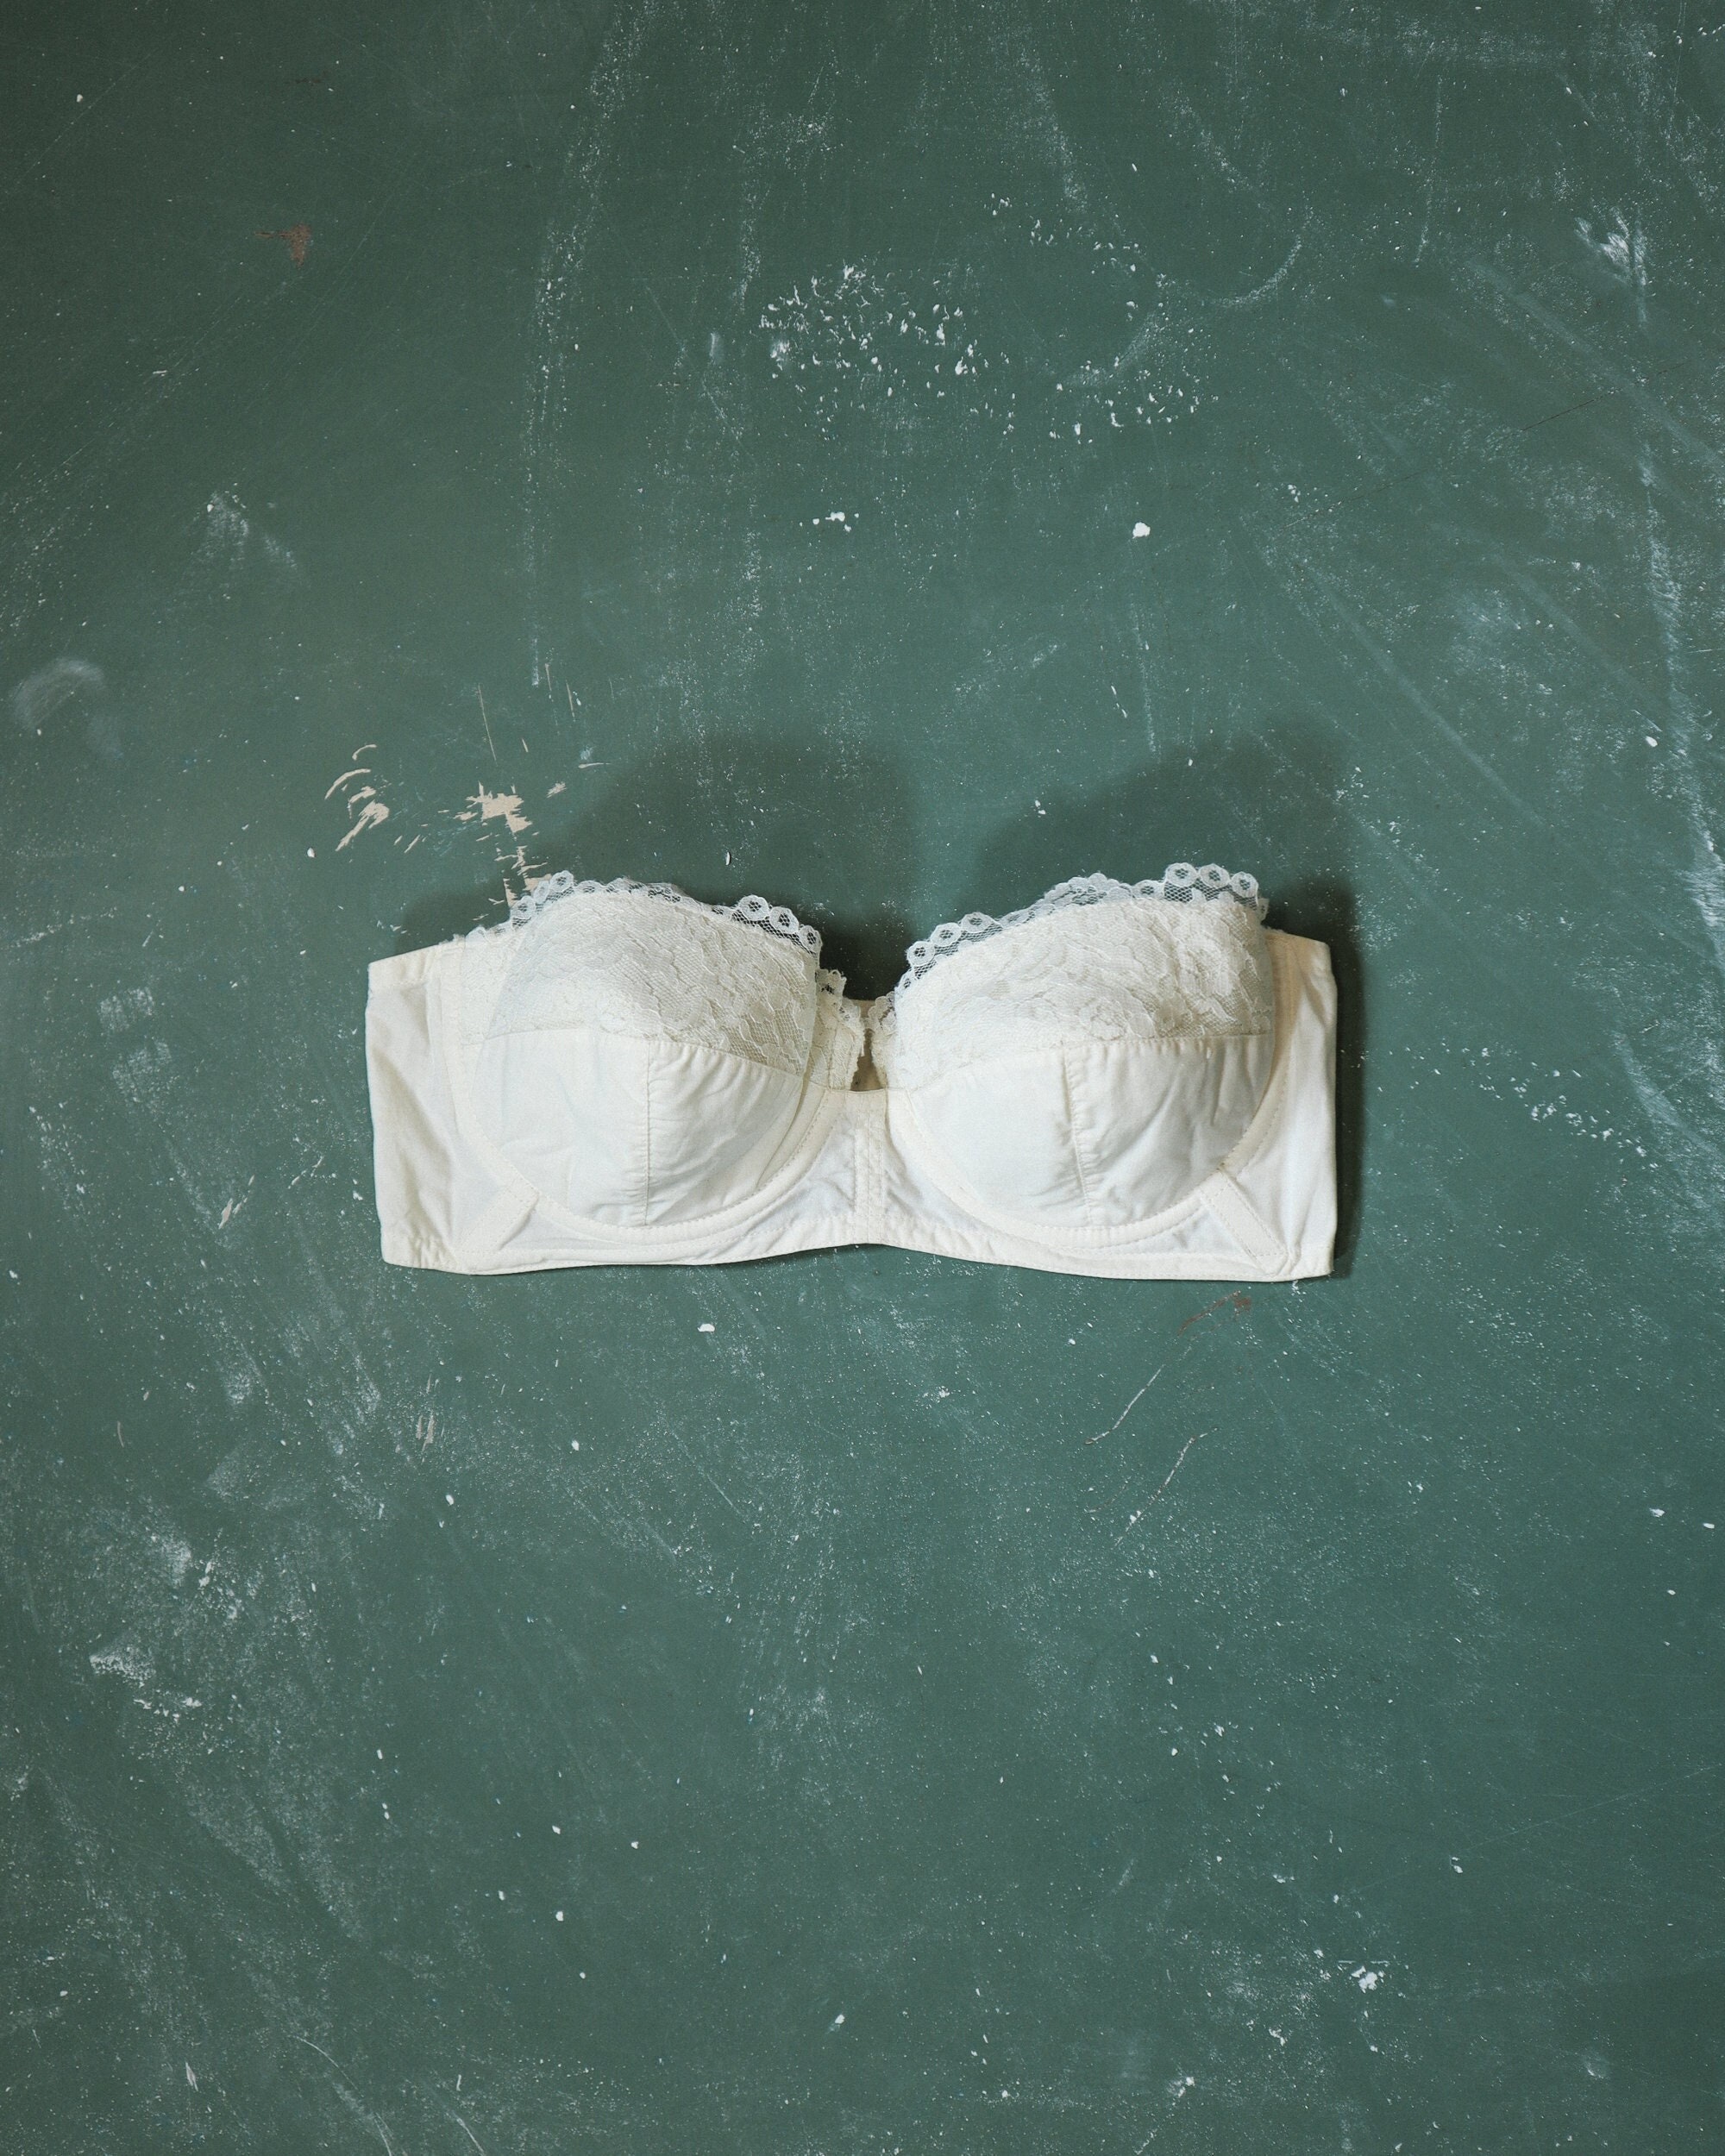 3 FemSupport White Wedding Dress strapless bra for the Big Day breast lift  up bra for the Bride